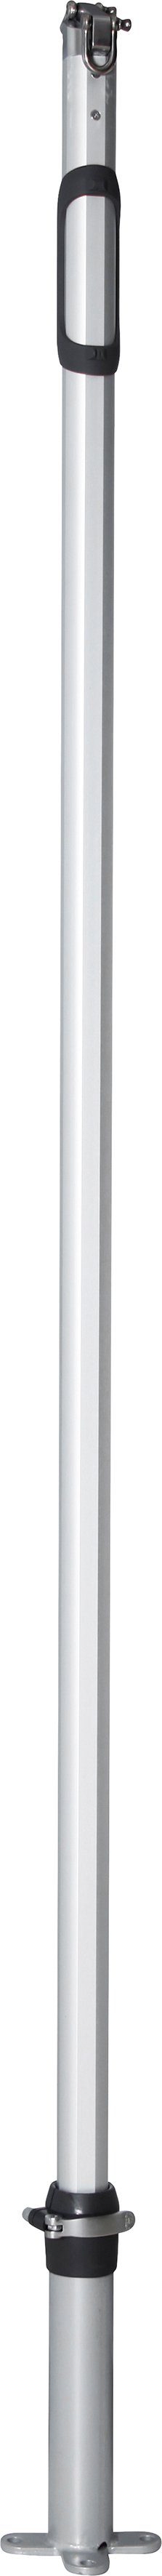 doppler® Sonnensegelmast Alu-Pro, 220 cm Höhe, Mast-Höhe ca. 220 cm inklusive Standfuß